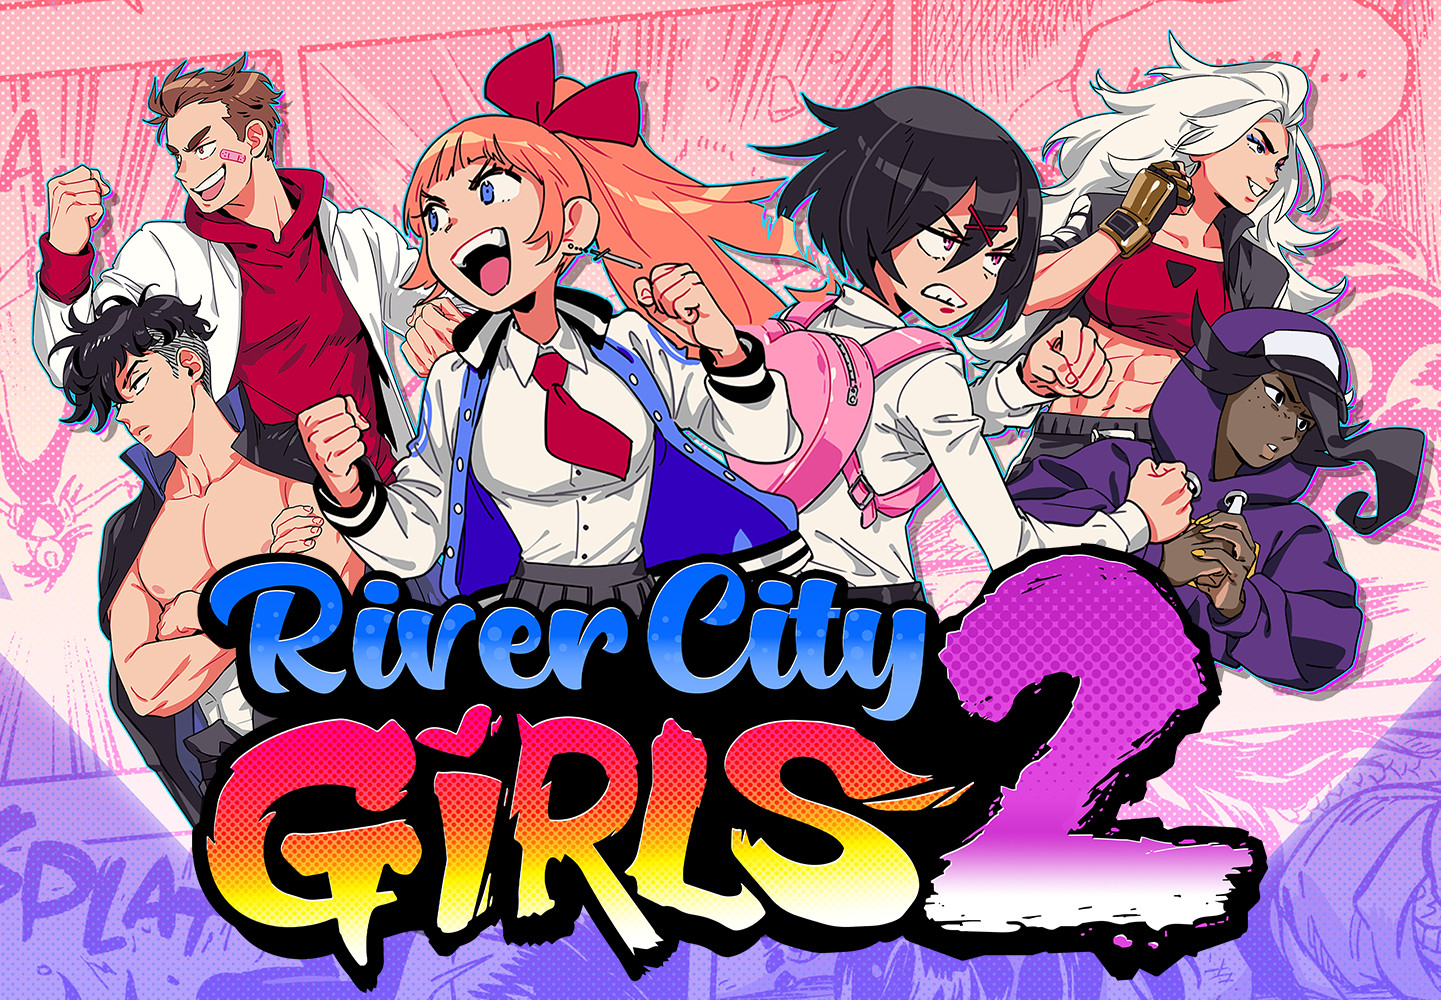 River City Girls 2 EU Steam CD Key